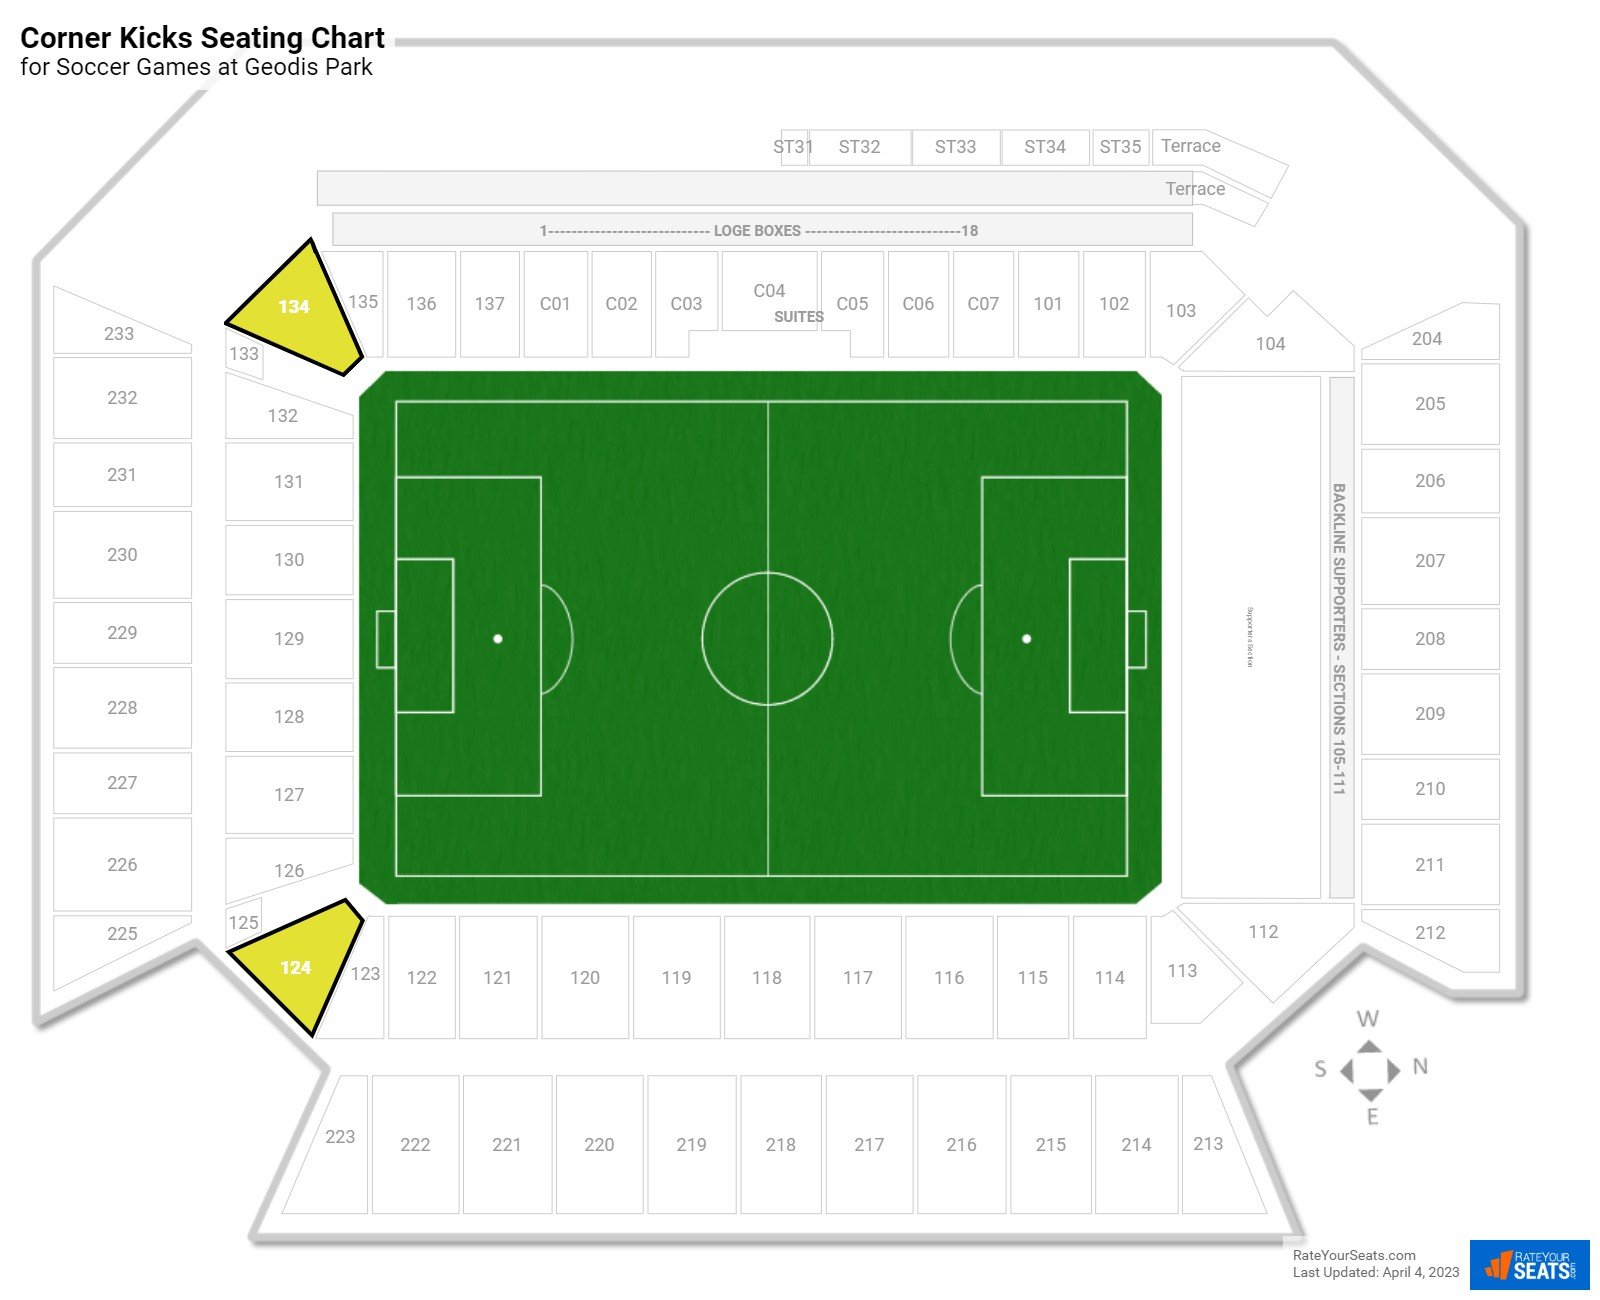 Soccer Corner Kicks Seating Chart at Geodis Park